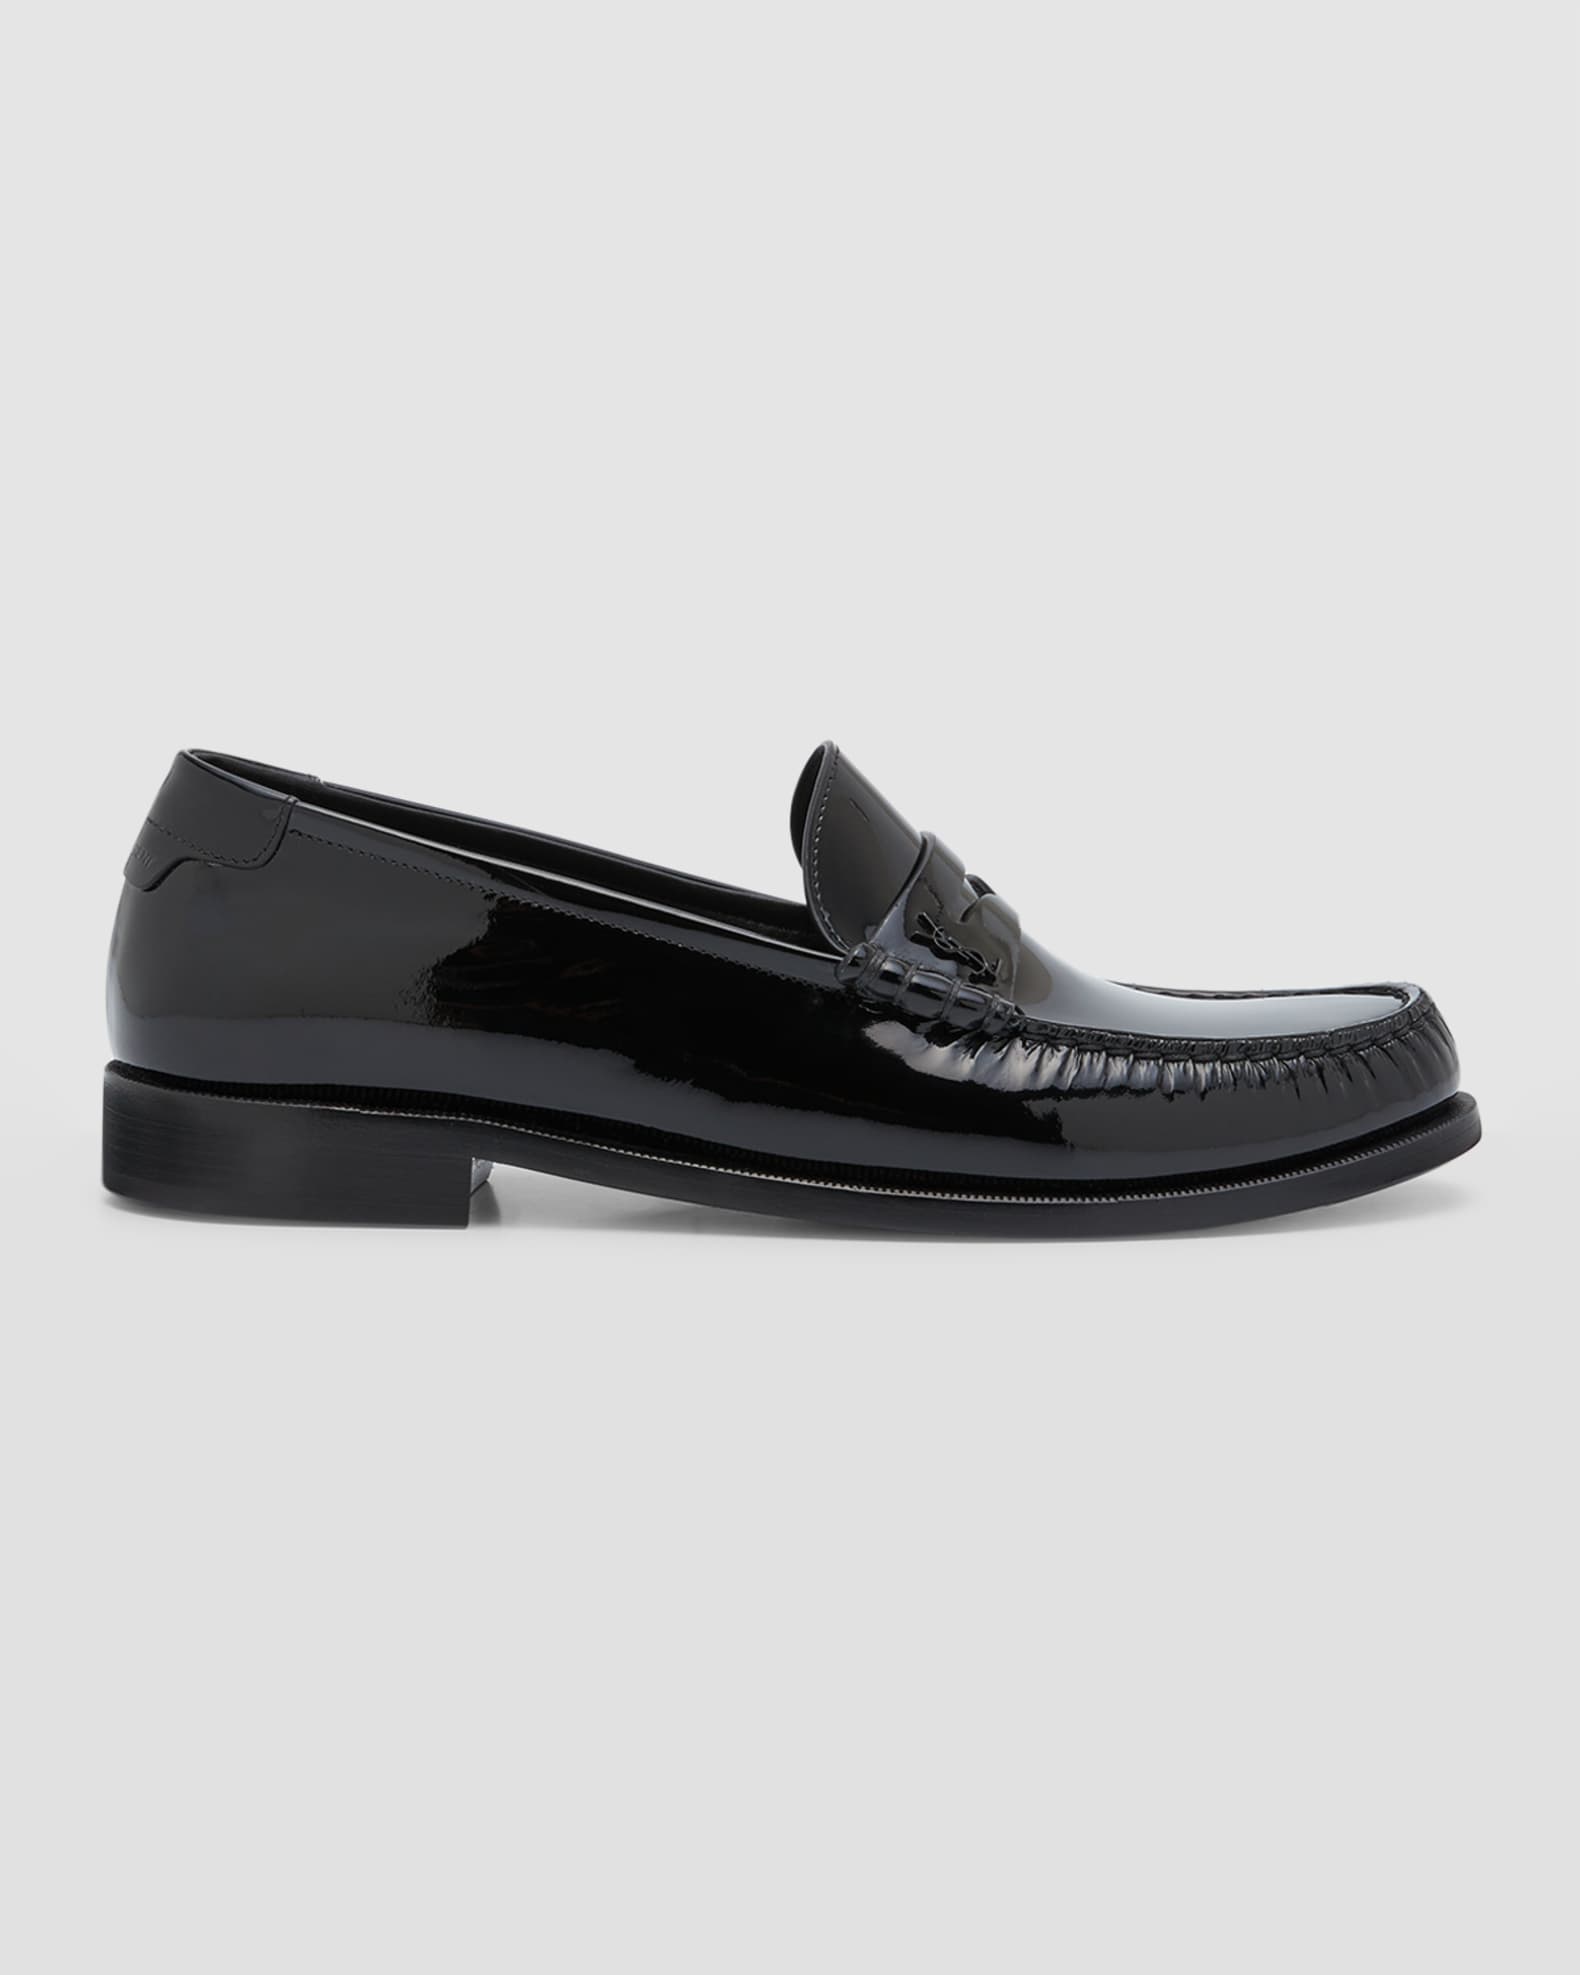 Saint Laurent Men's Patent Leather Penny Loafers | Neiman Marcus